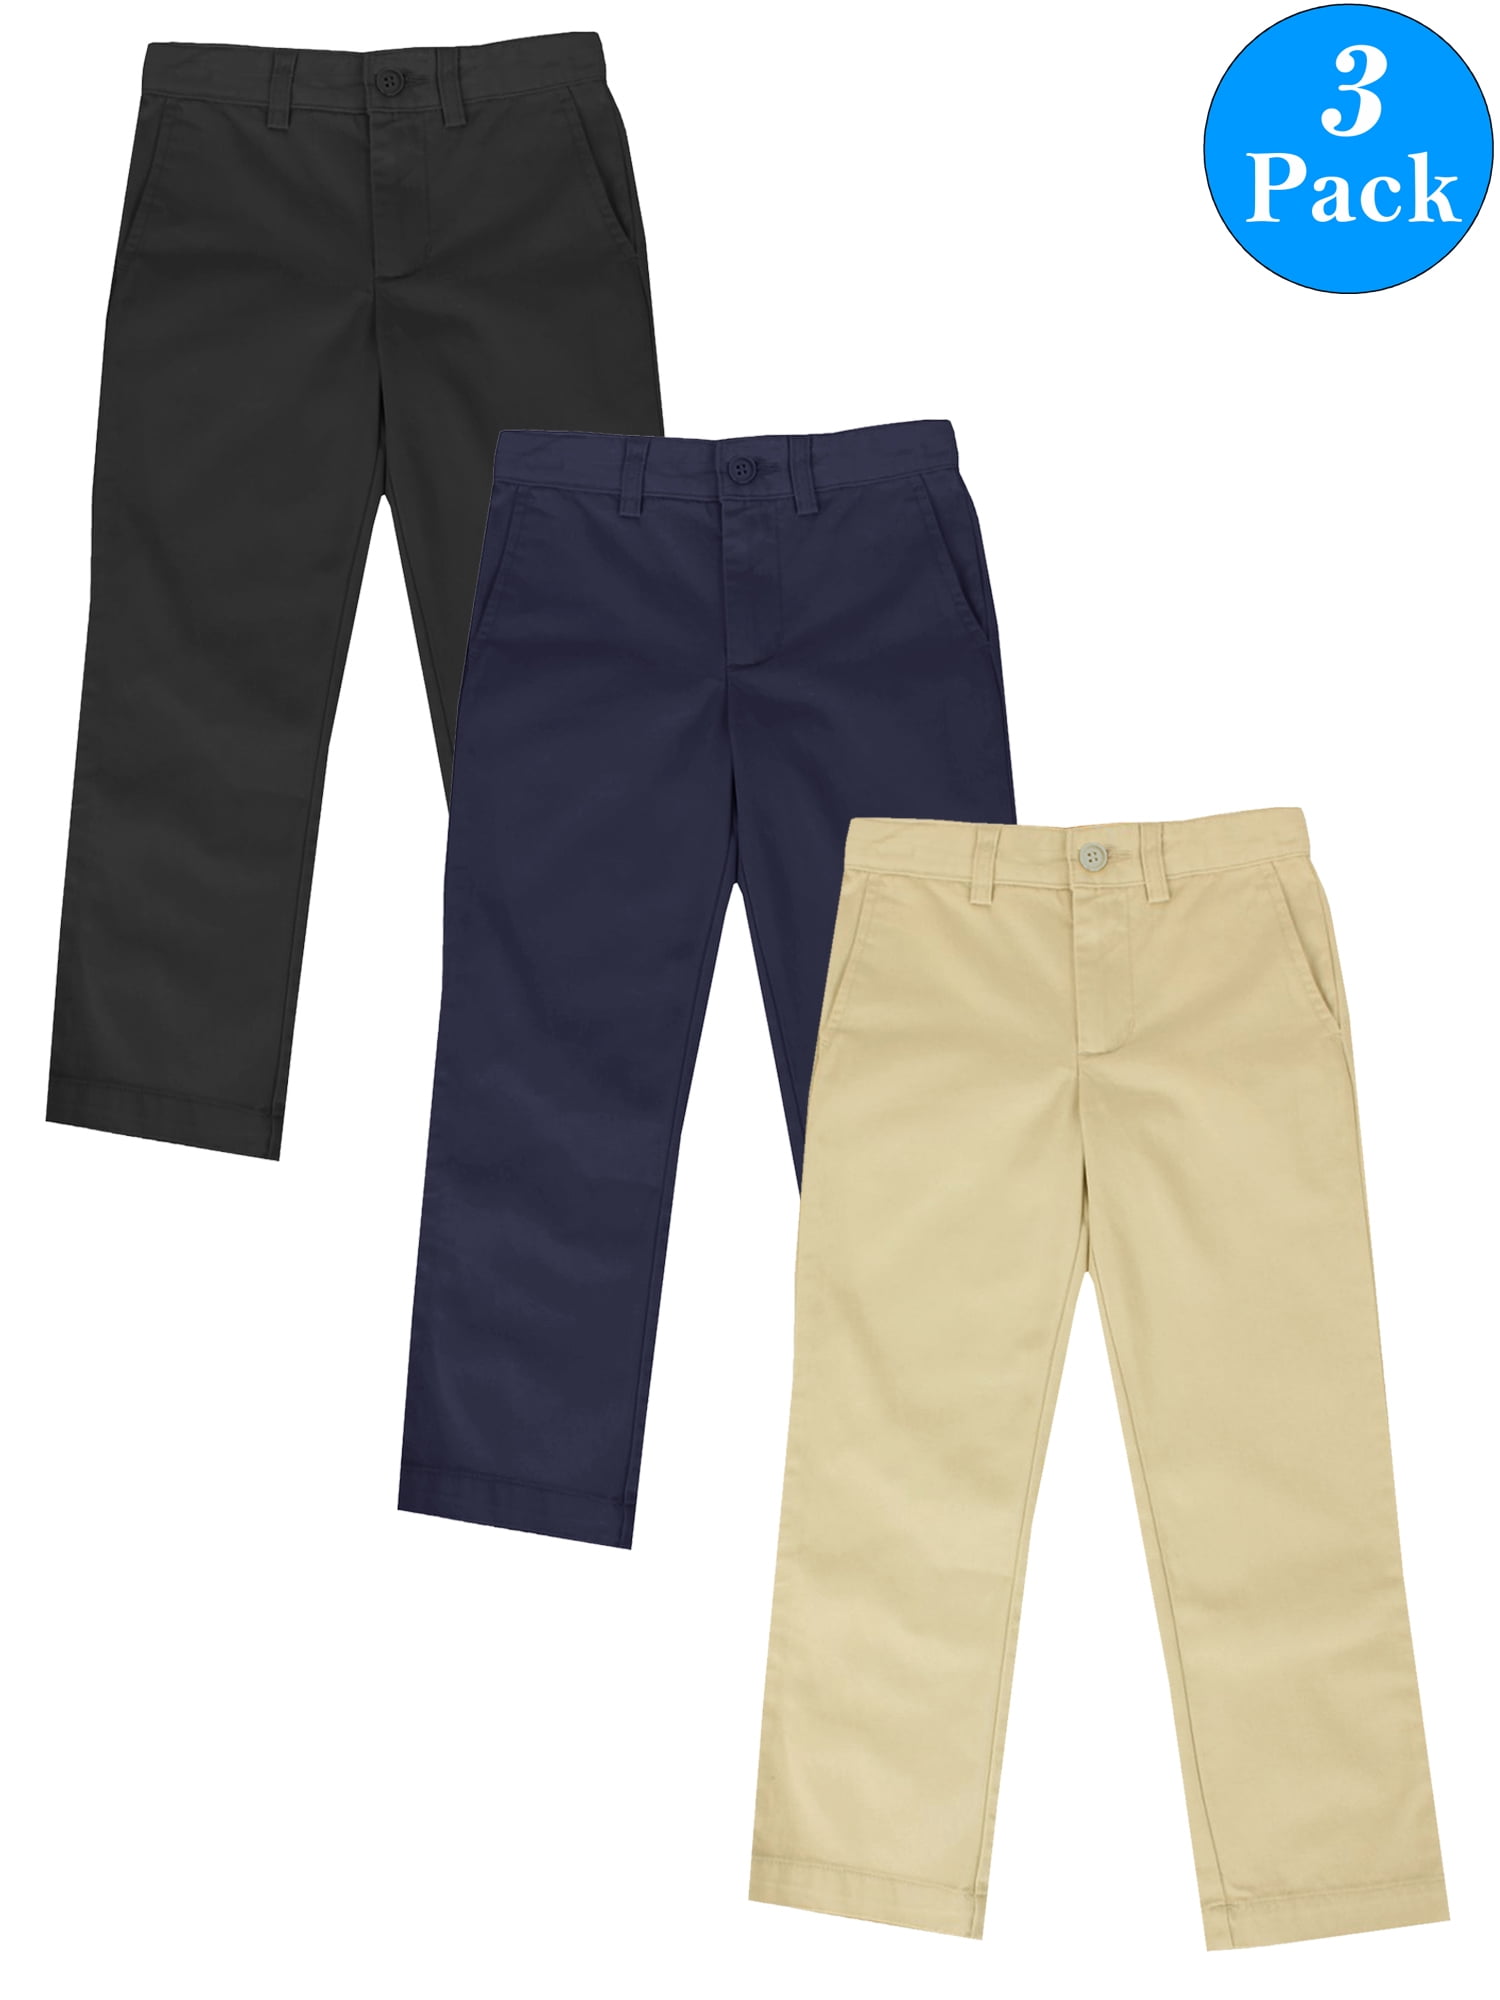 Pull-On Elastic Waist Pants [MD403-PULL ON-NAVY] - FlynnO'Hara Uniforms